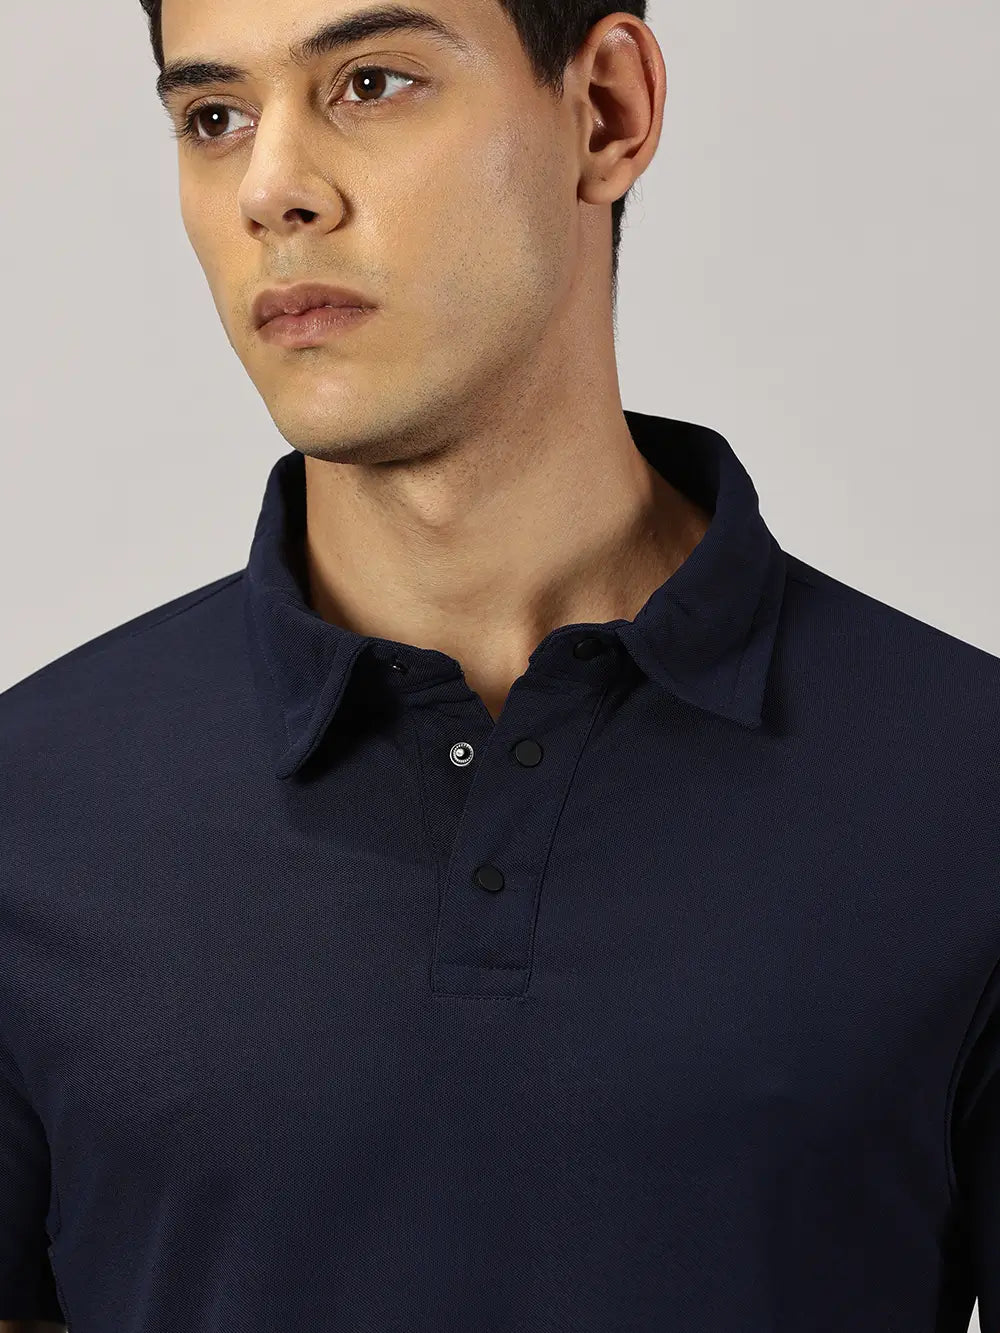 A model wearing Blue Tyga navy blue odor-free polo t-shirt